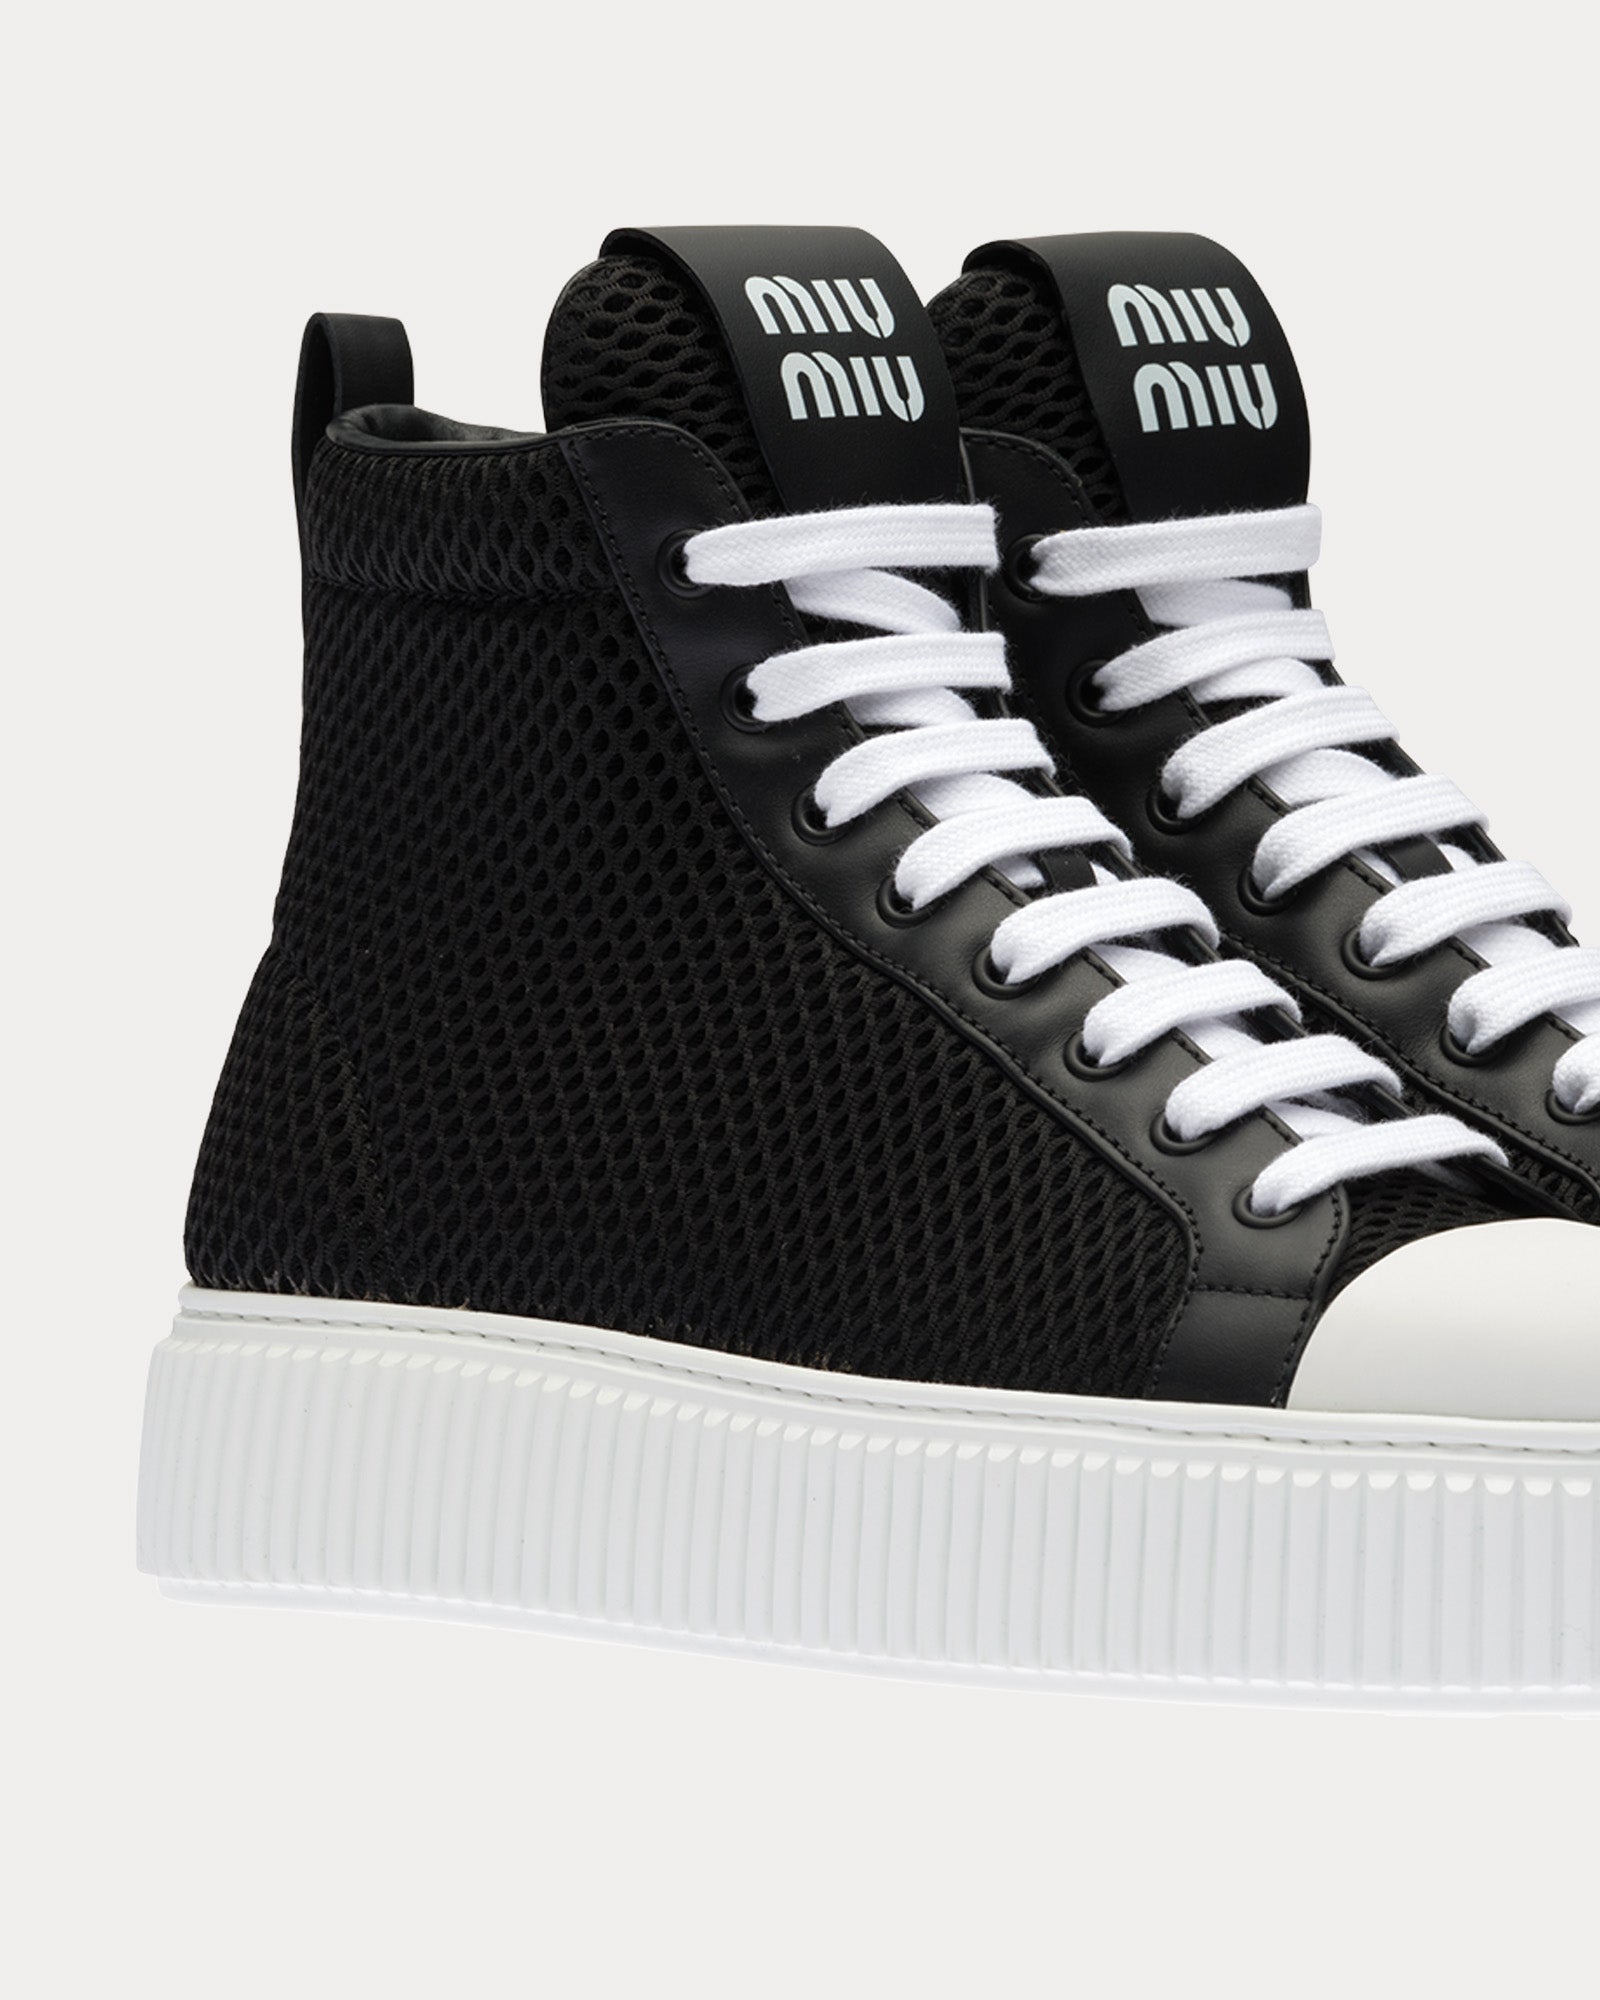 Miu Miu - Mesh Flatform Black High Top Sneakers